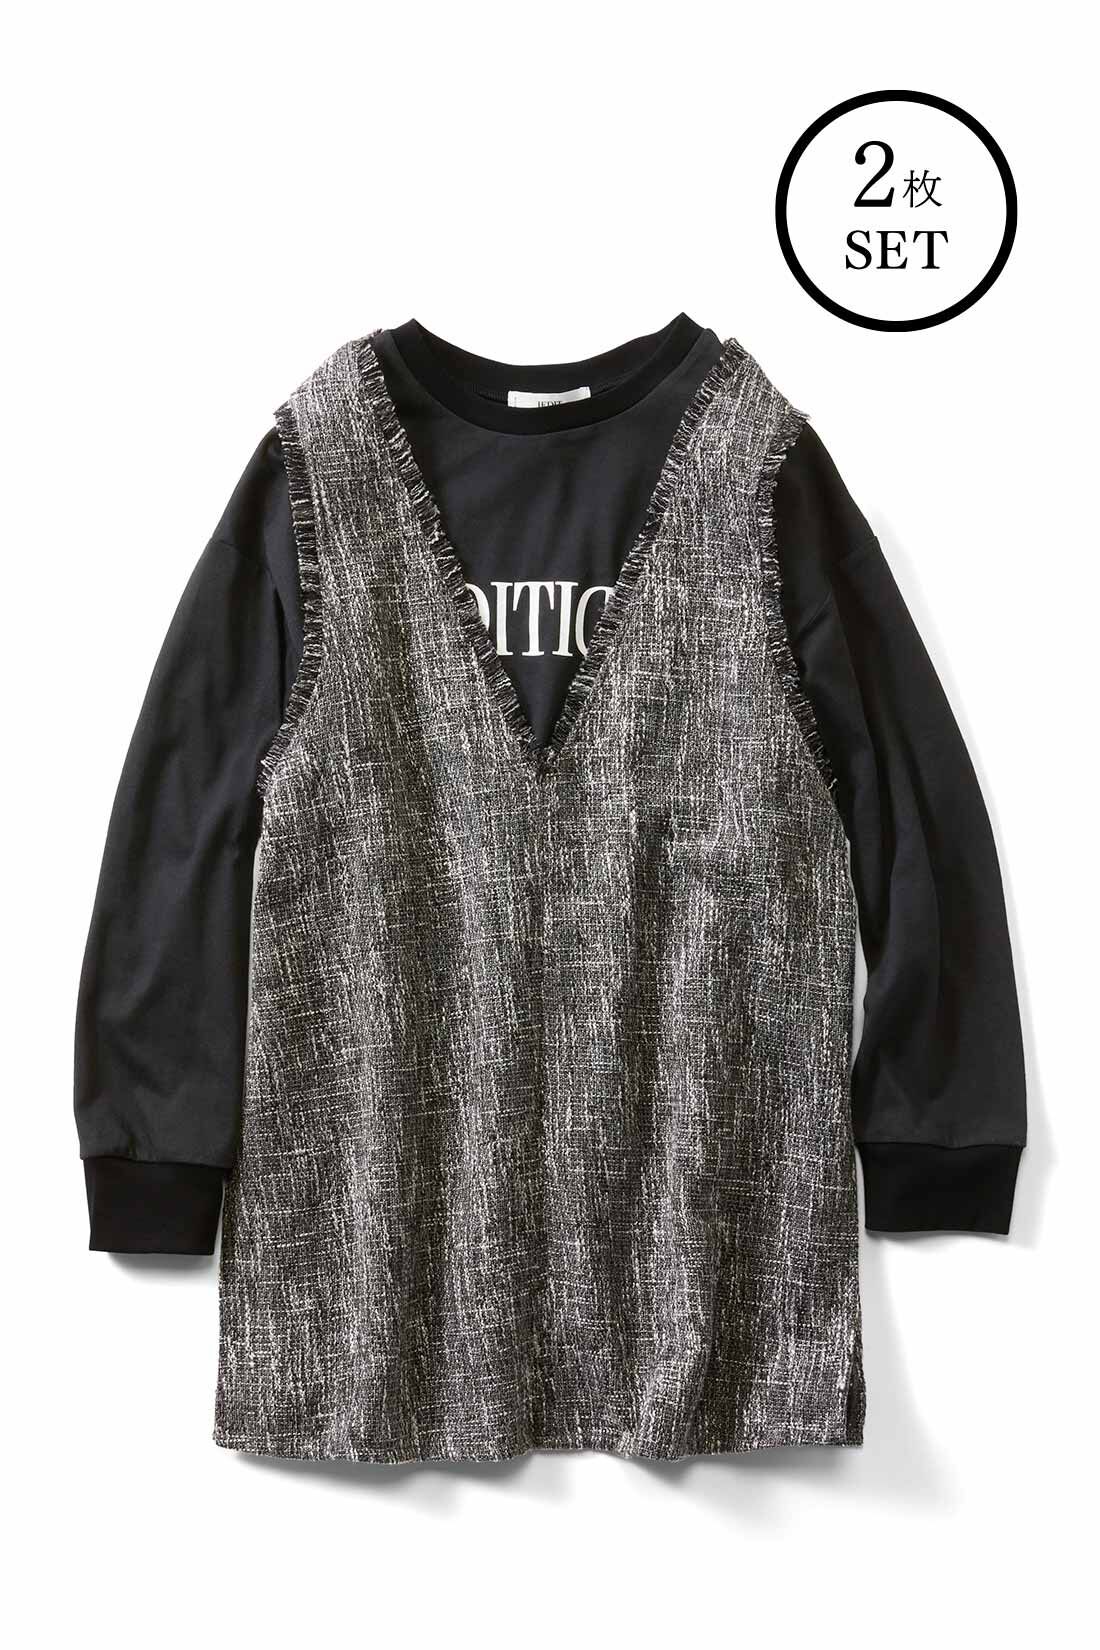 IEDIT|IEDIT[イディット]　こなれコーデがかなう ツイードベストと長袖ロゴTシャツのセット〈ベージュ〉|〈ブラック〉